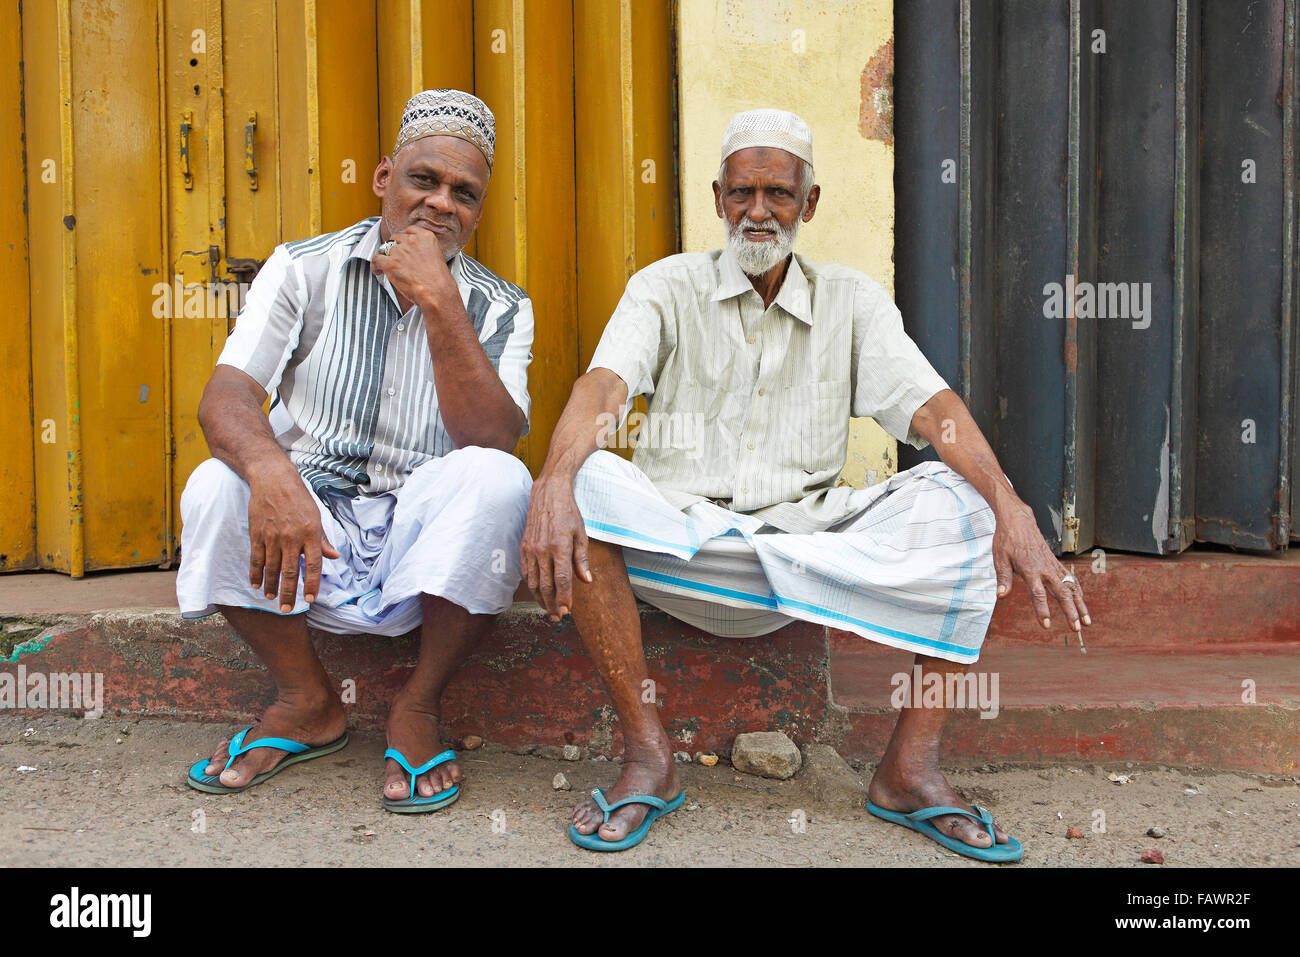 Religious Muslims with caps and white beards, Pettah, Colombo, Sri Lanka Stock Photo